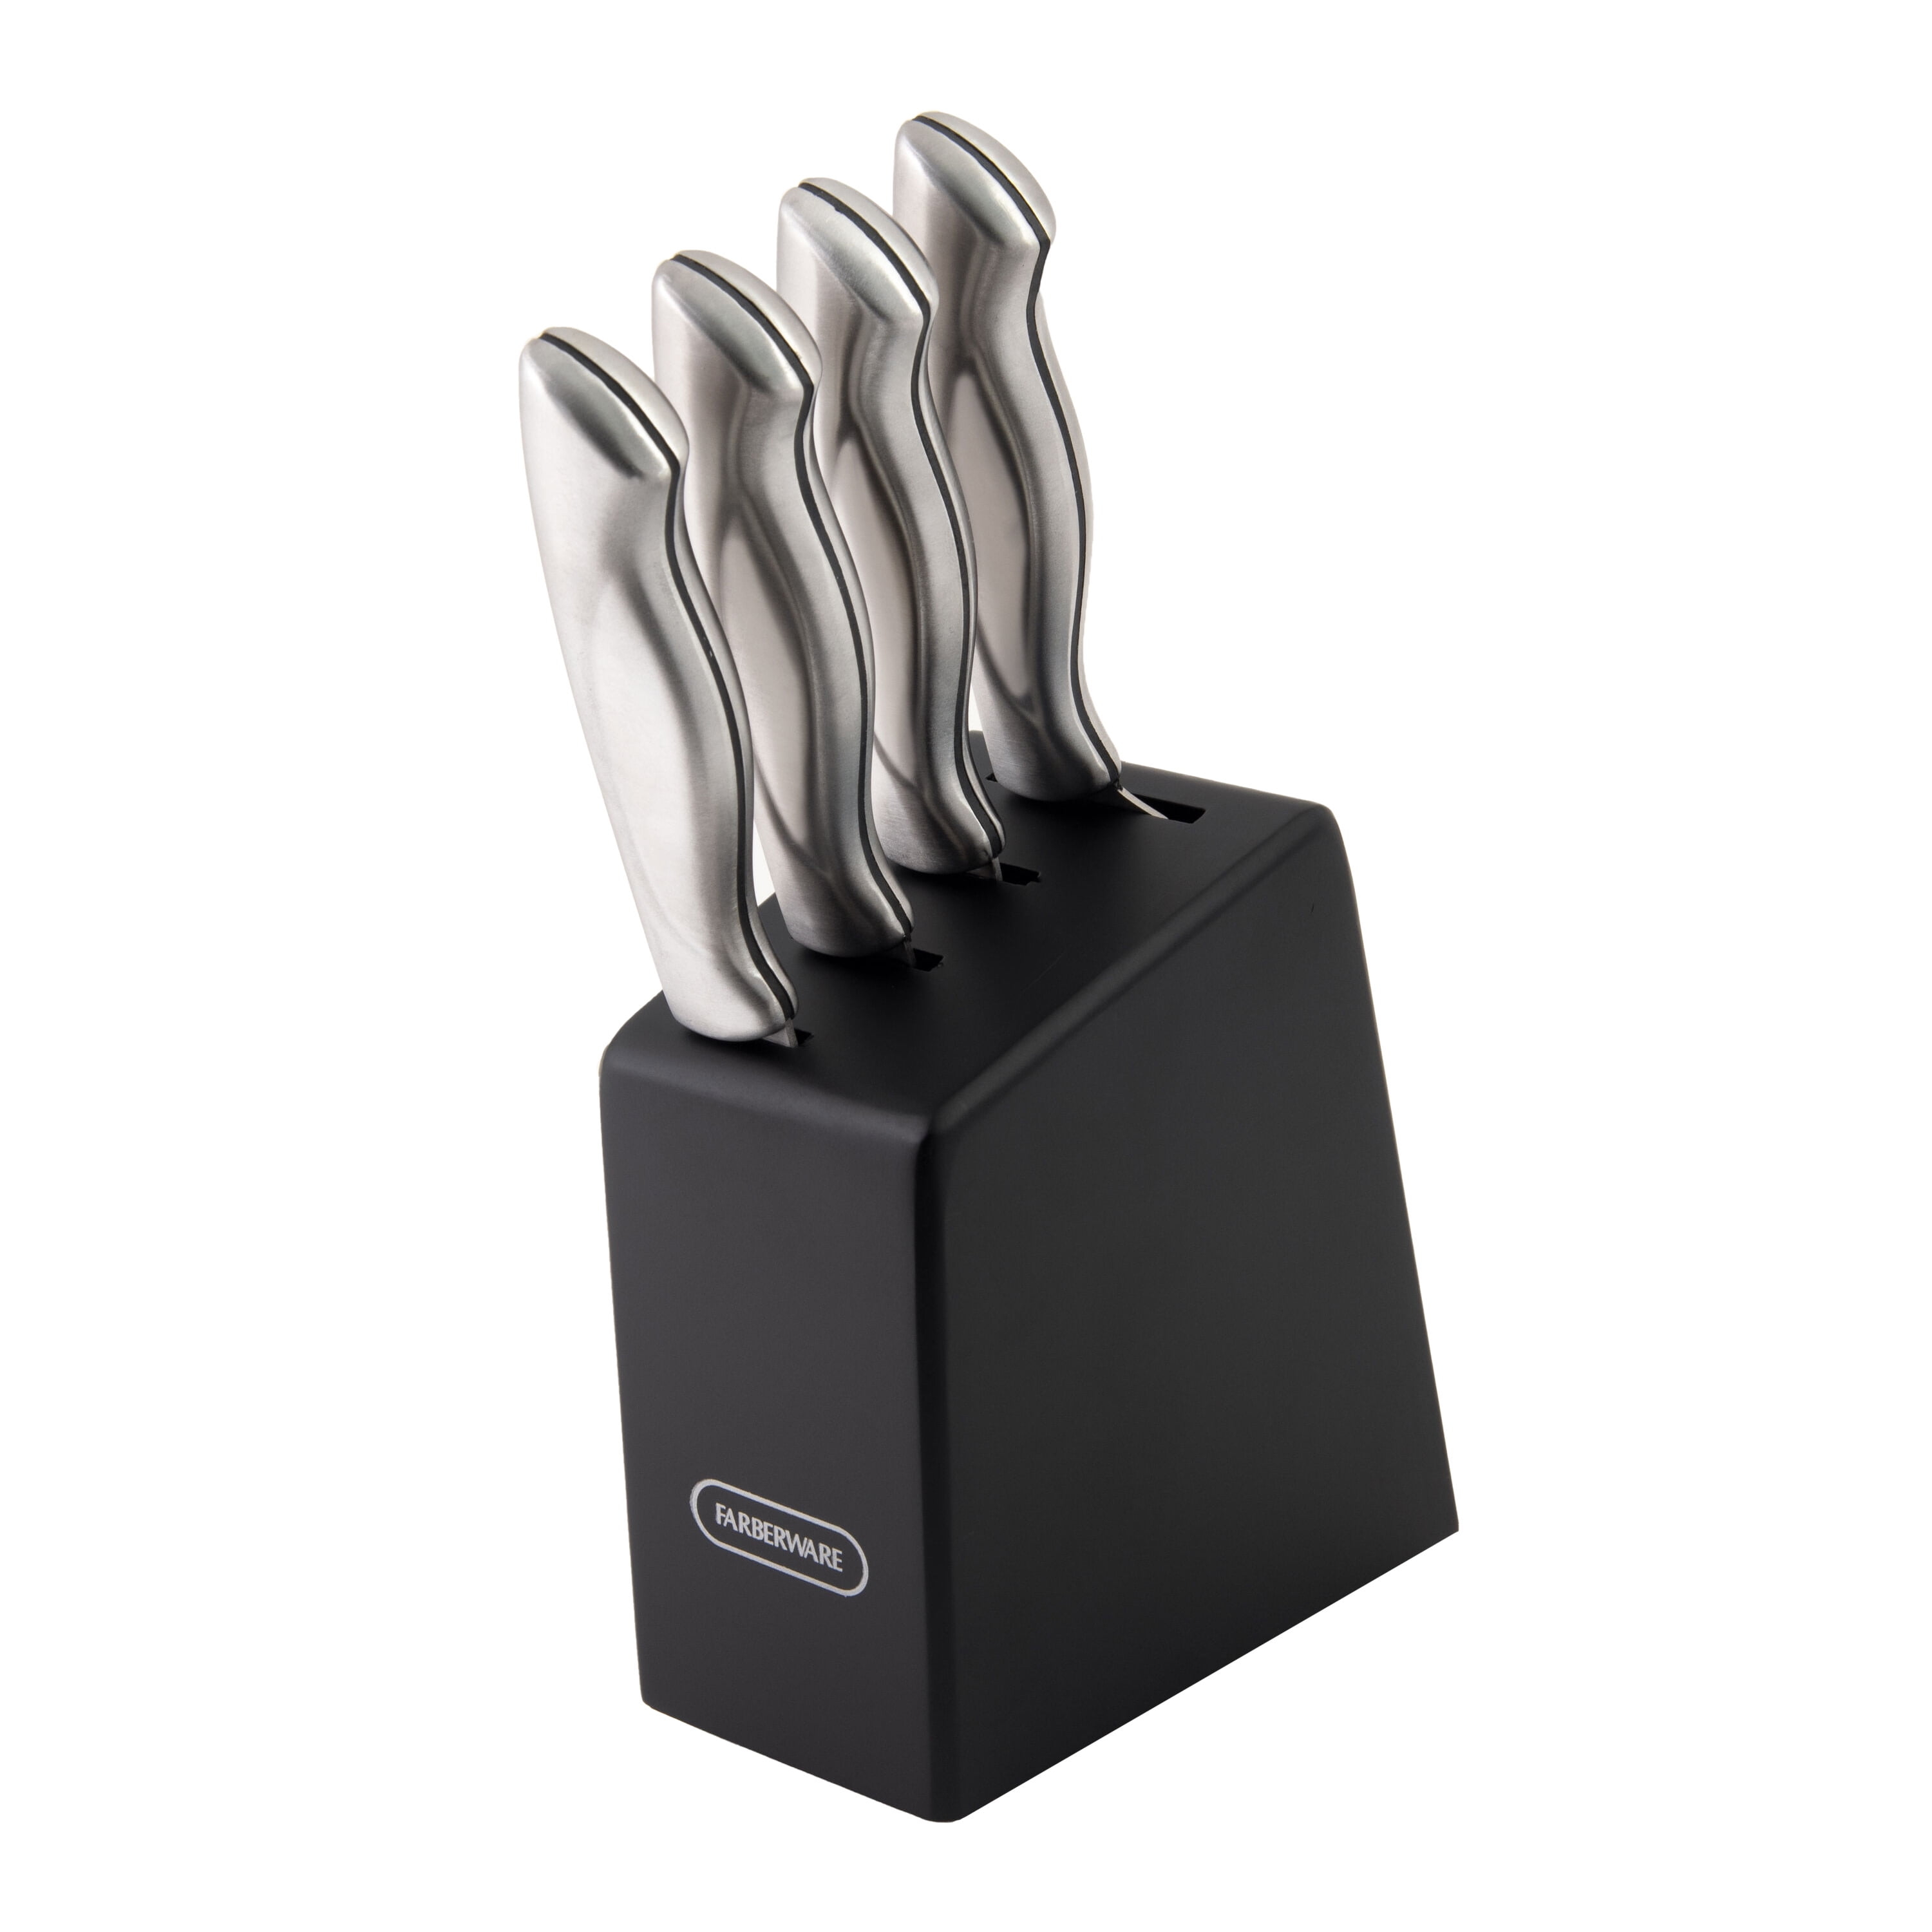 Farberware Knife Set - Set of 5 - Serrated Blade - Stainless Steel